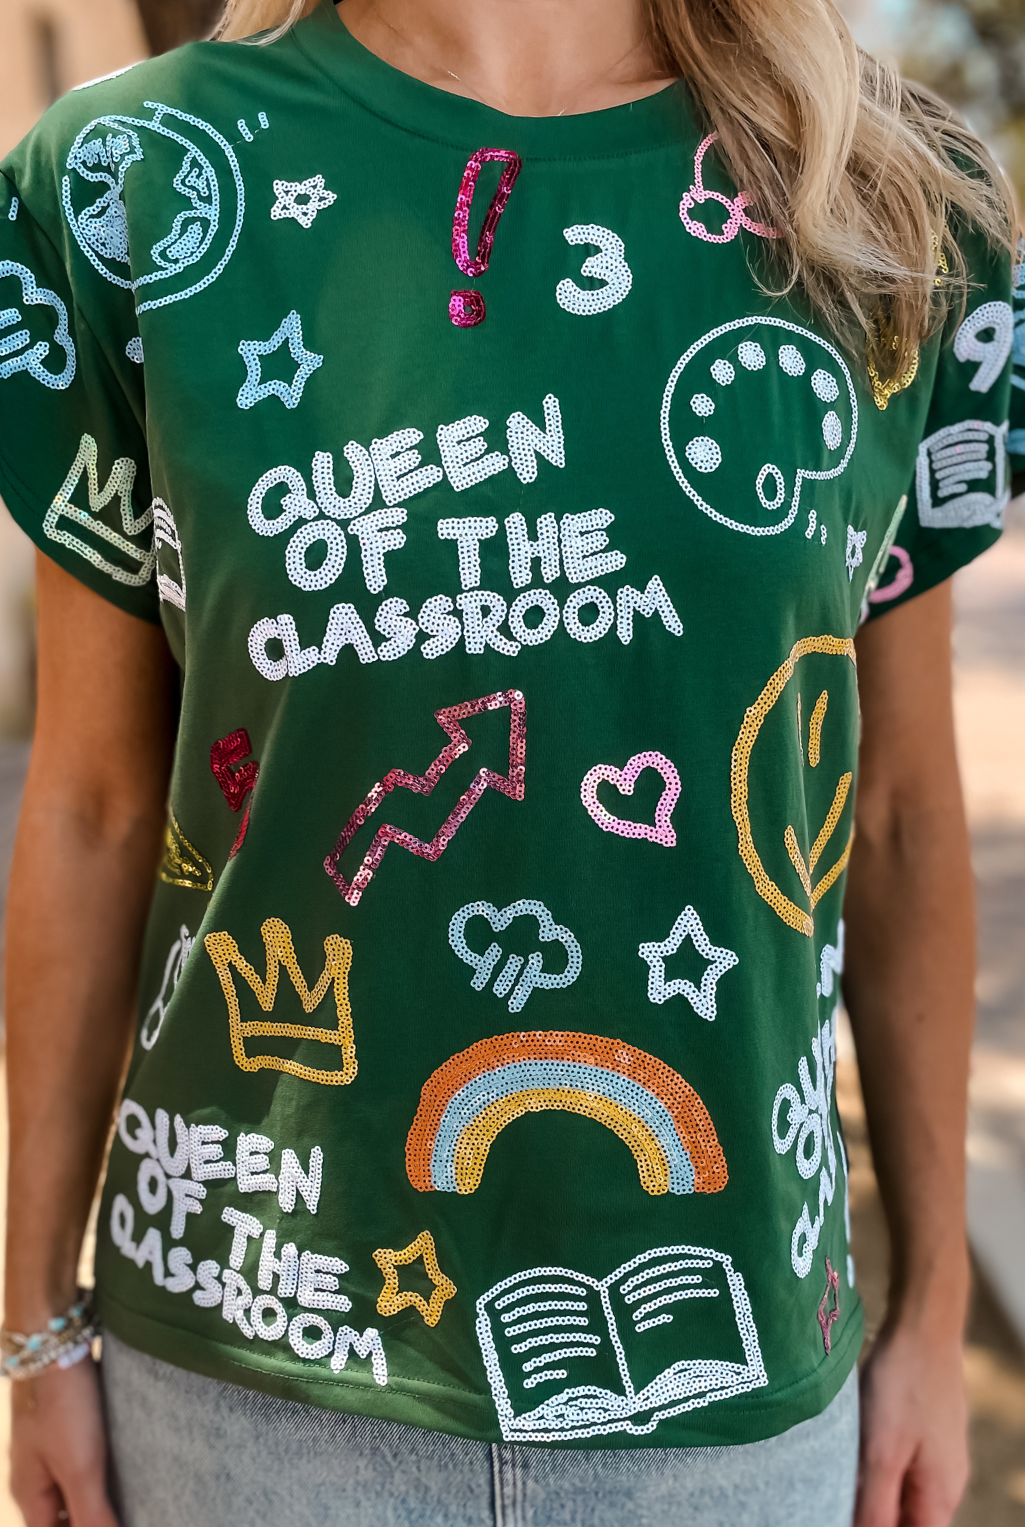 Queen Of The Classroom T-Shirt